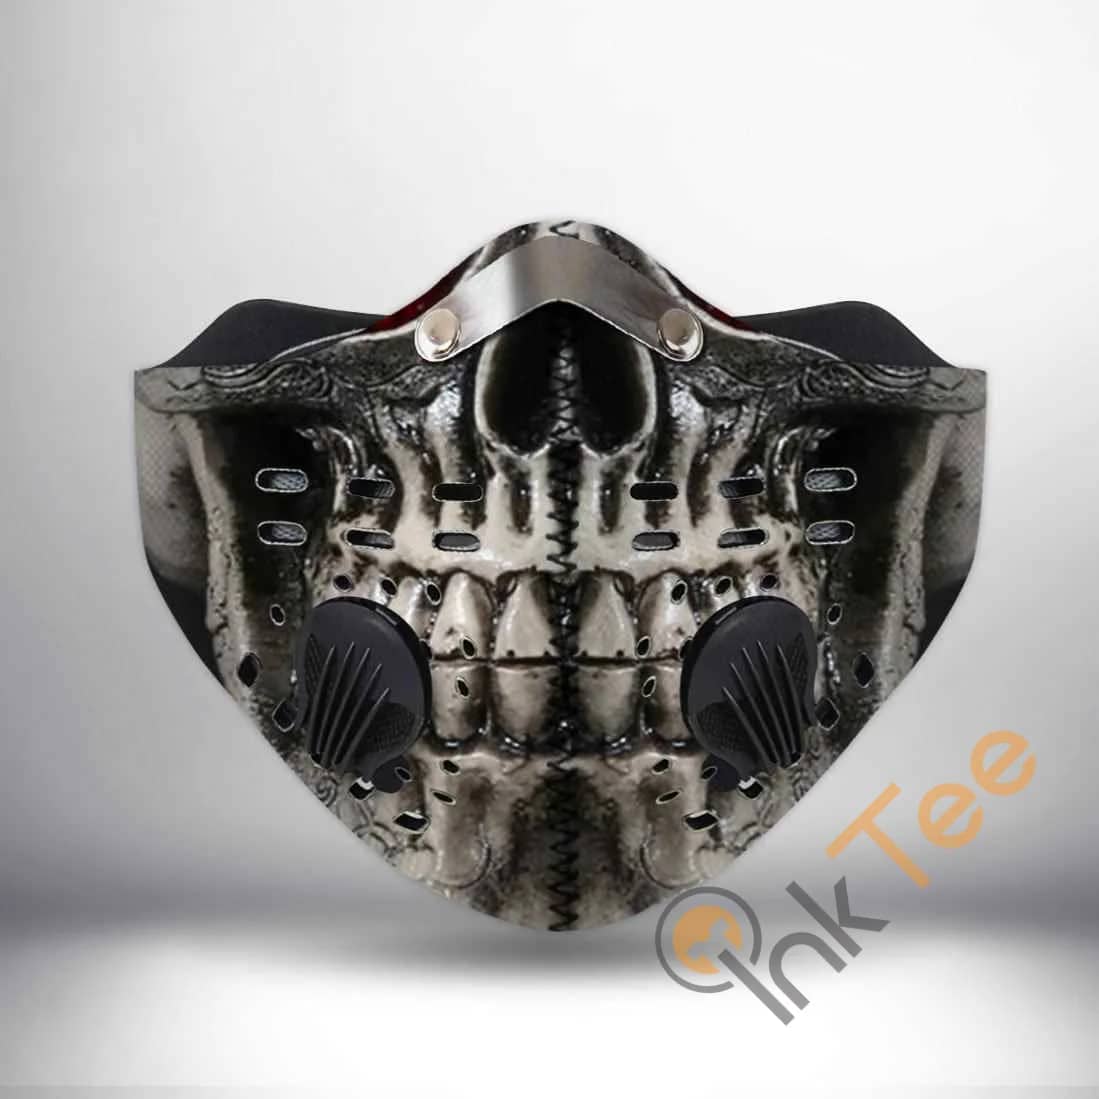 Skull Filter Activated Carbon Pm 2.5 Fm Sku 423 Face Mask